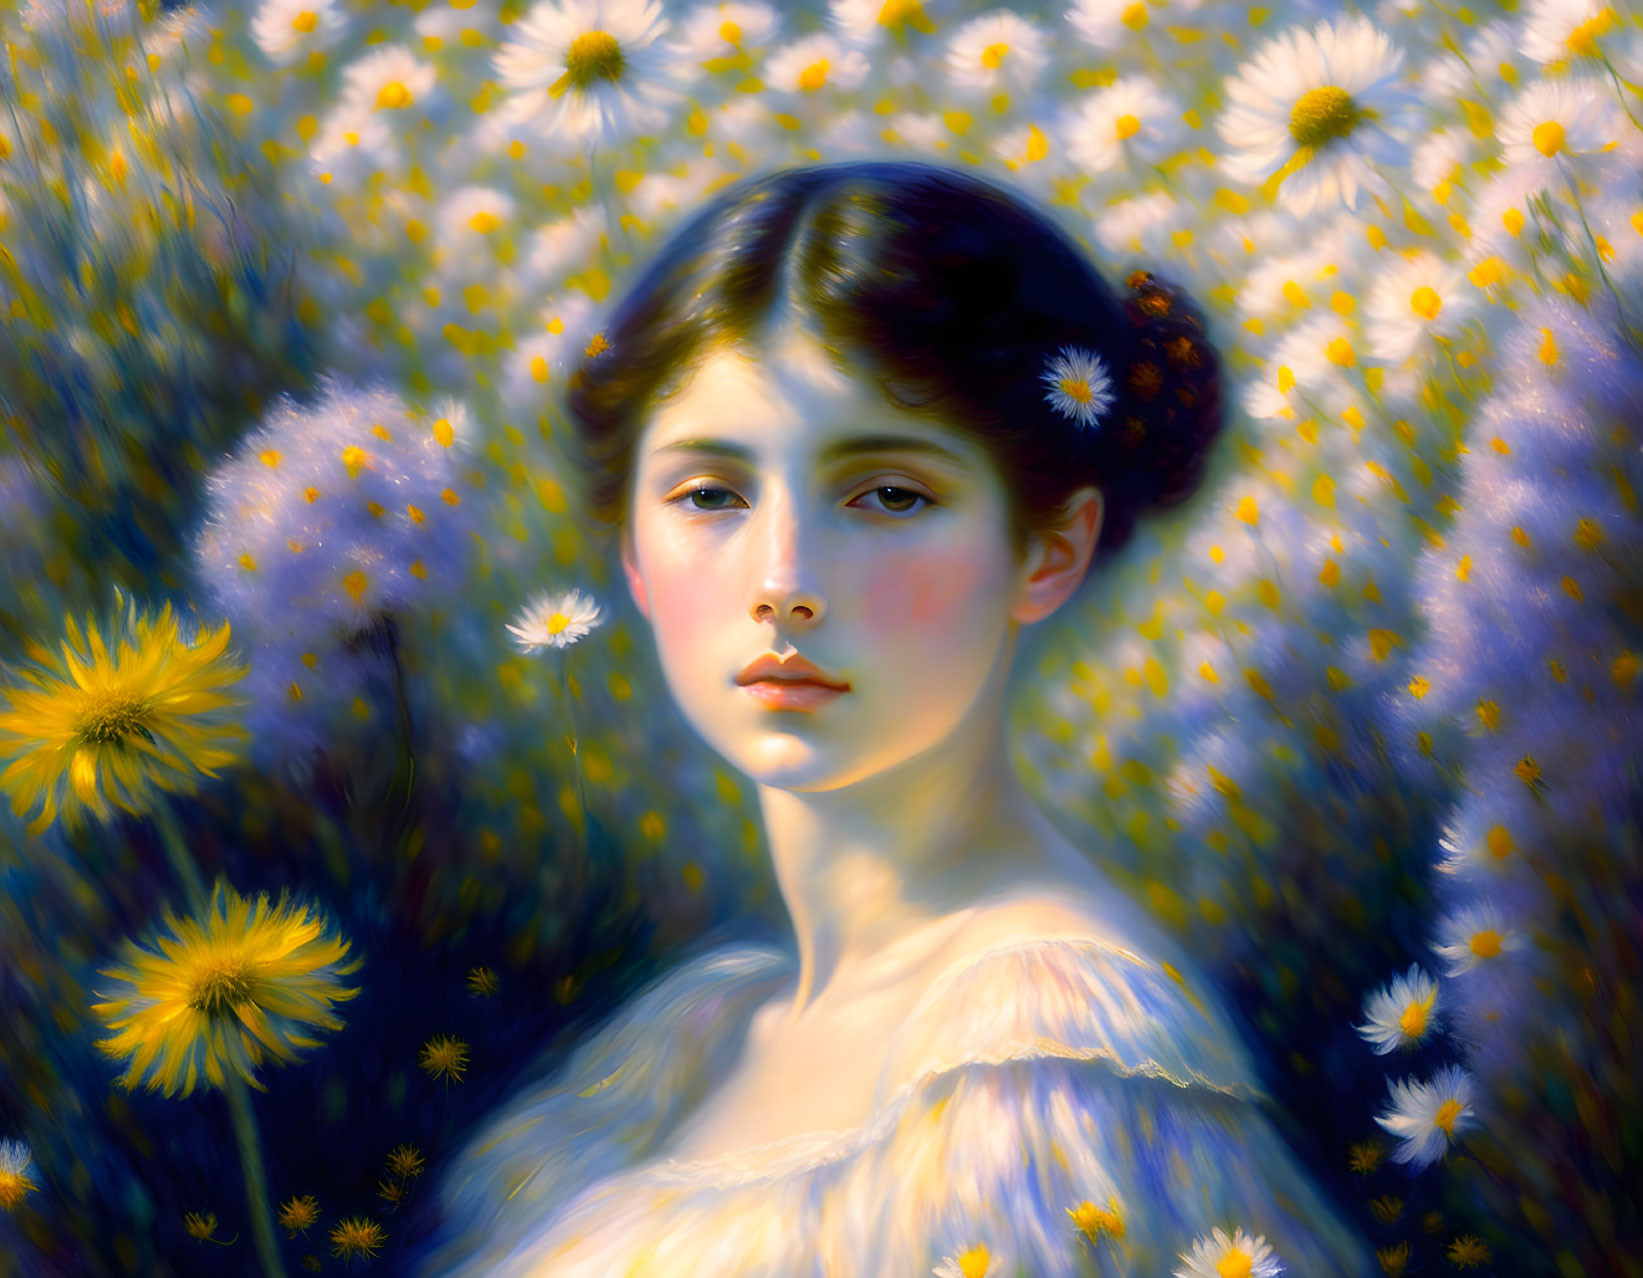 Young woman in serene portrait amidst lush dandelion field